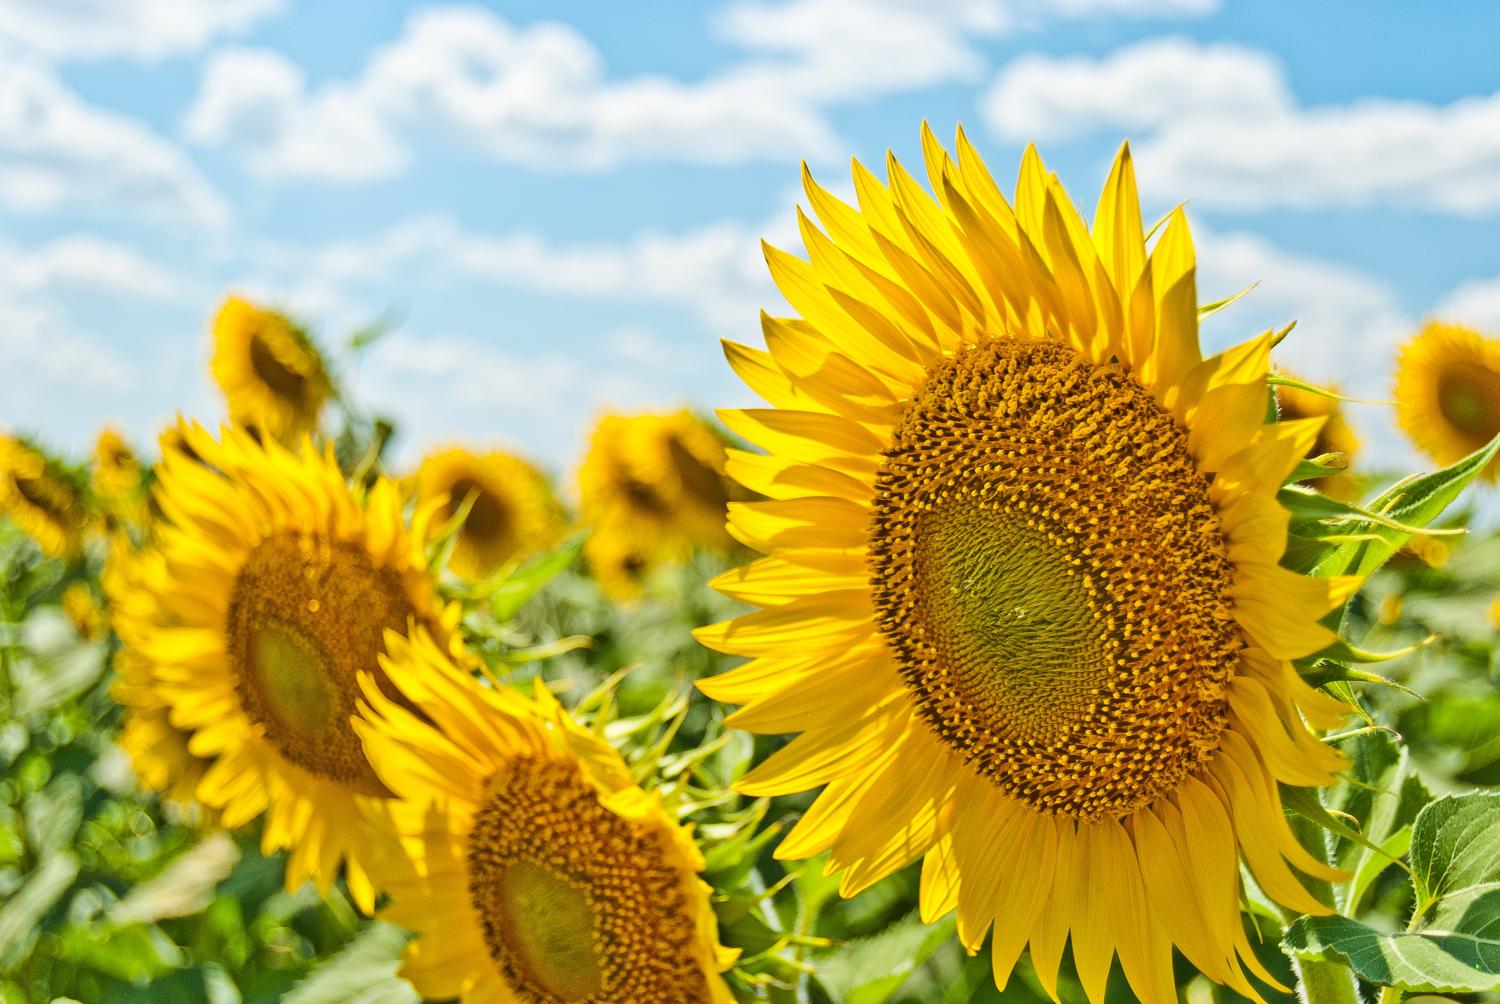 sunflower-farm.jpg